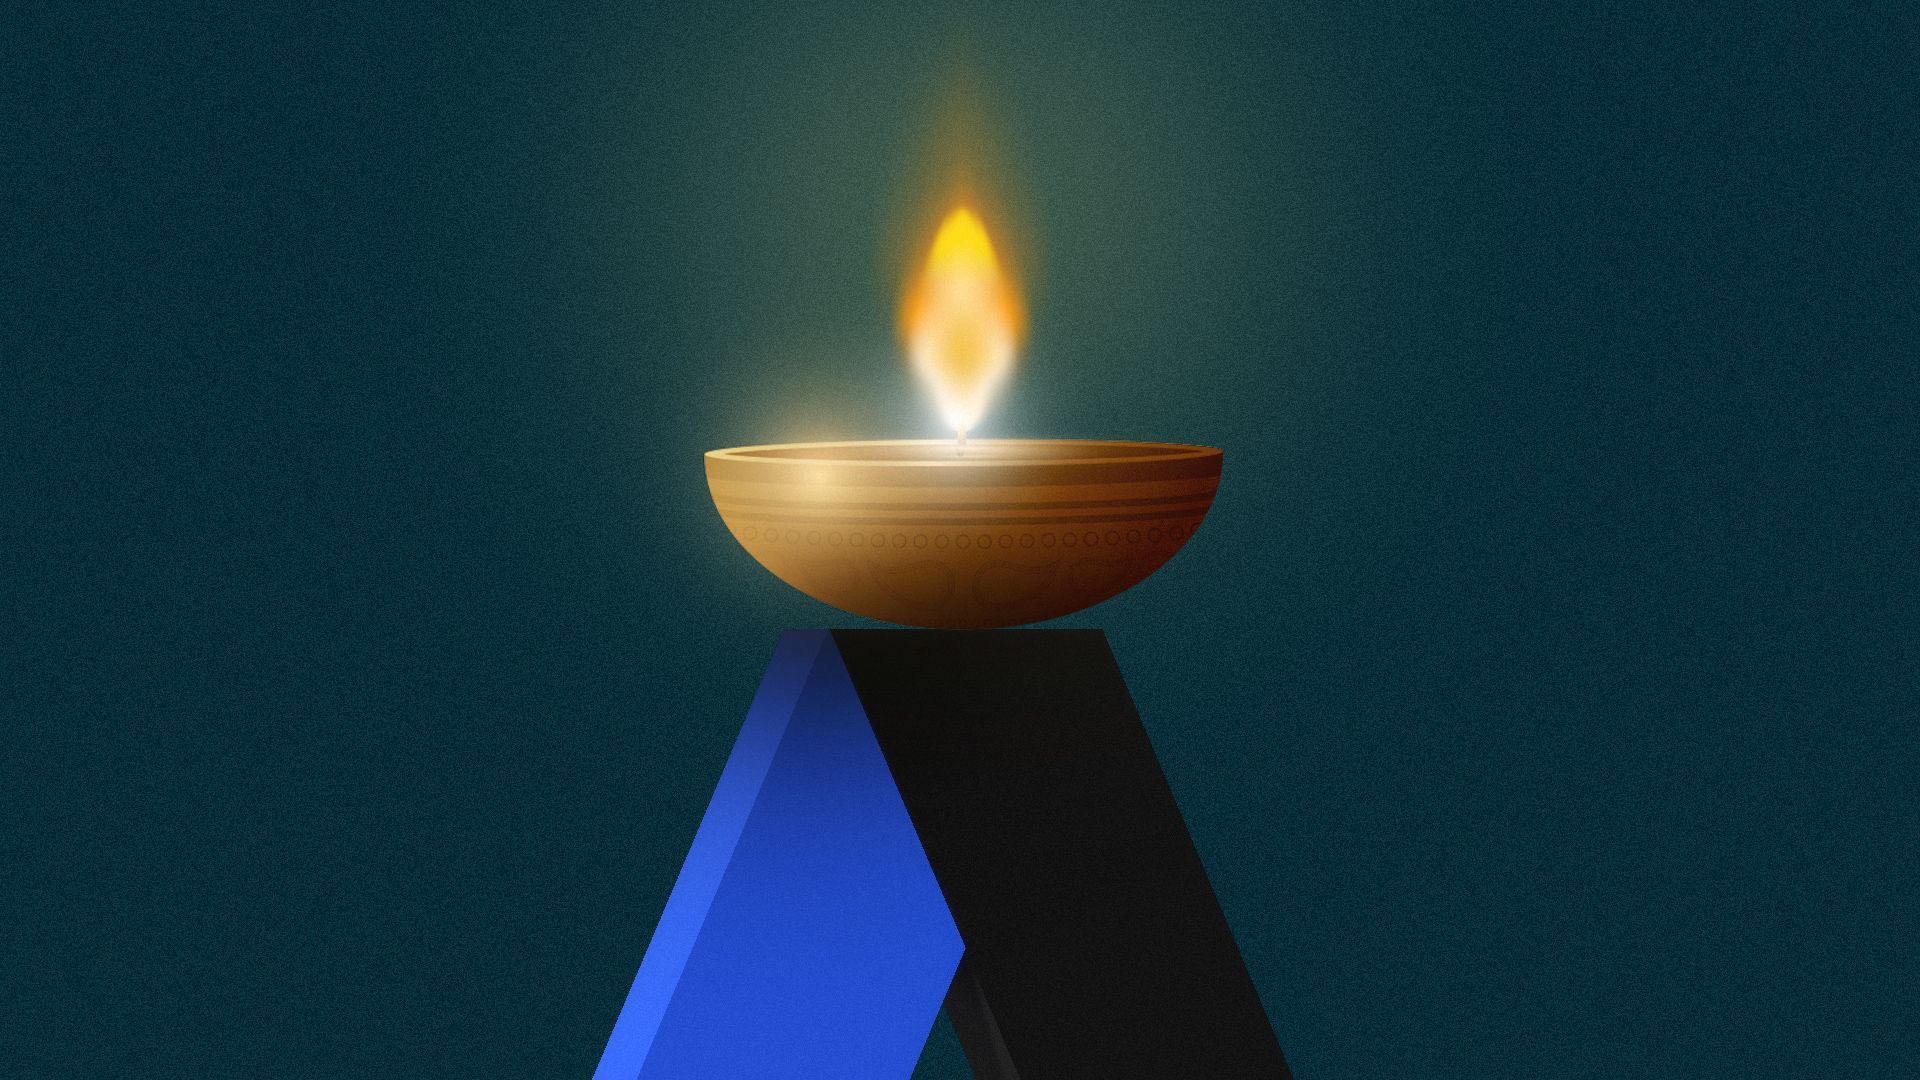 Illustration of a diya lamp setting on top of the Axios logo.